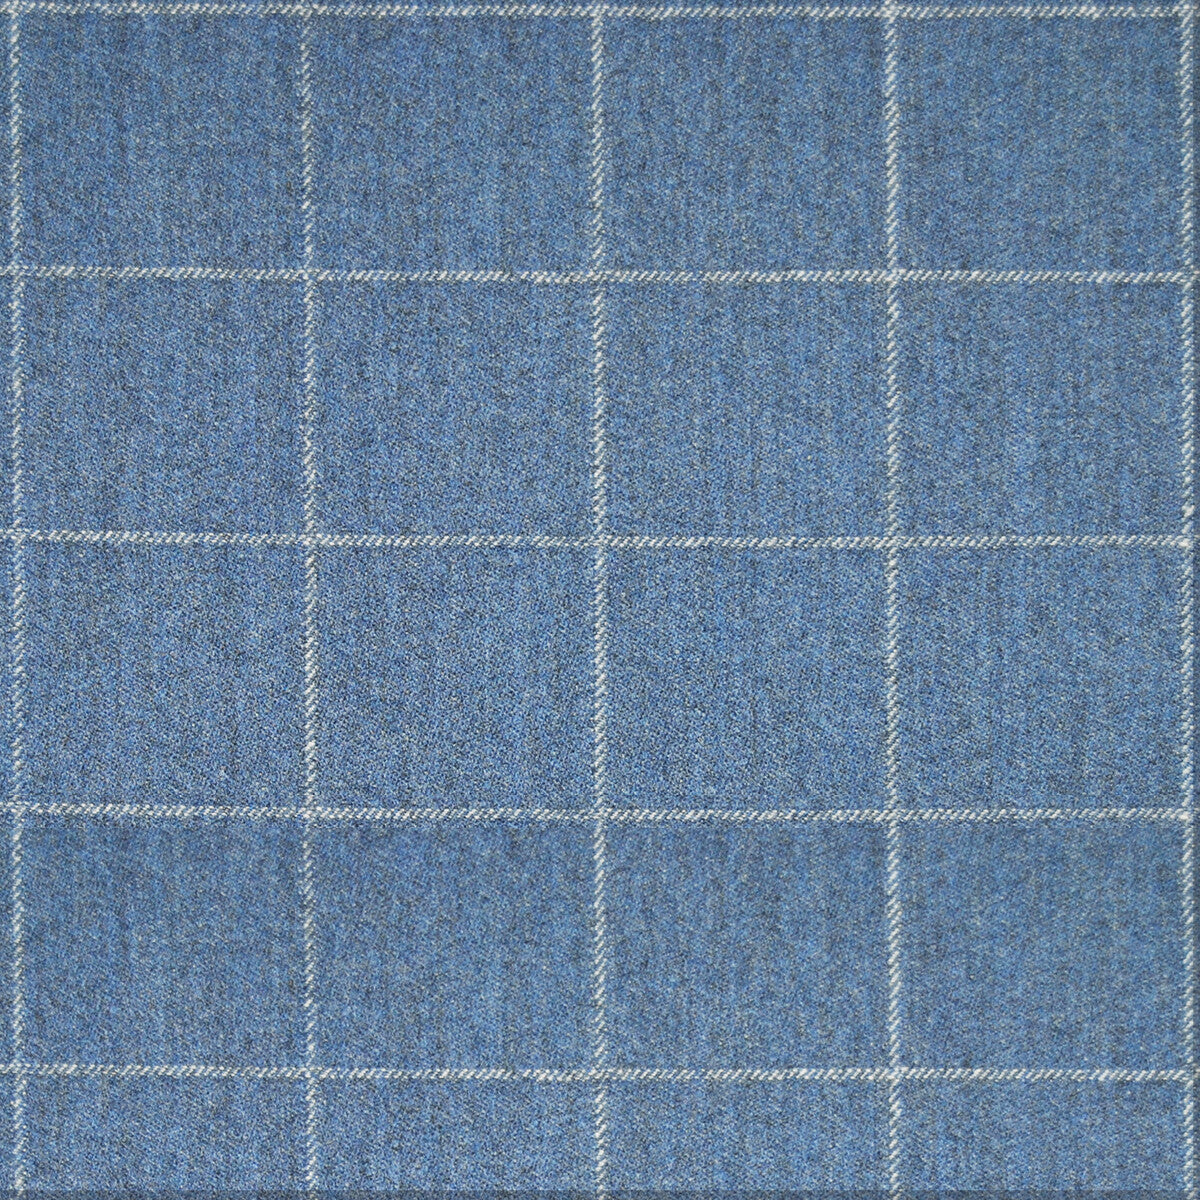 Rascafria fabric in azul color - pattern LCT5459.004.0 - by Gaston y Daniela in the Lorenzo Castillo IV collection